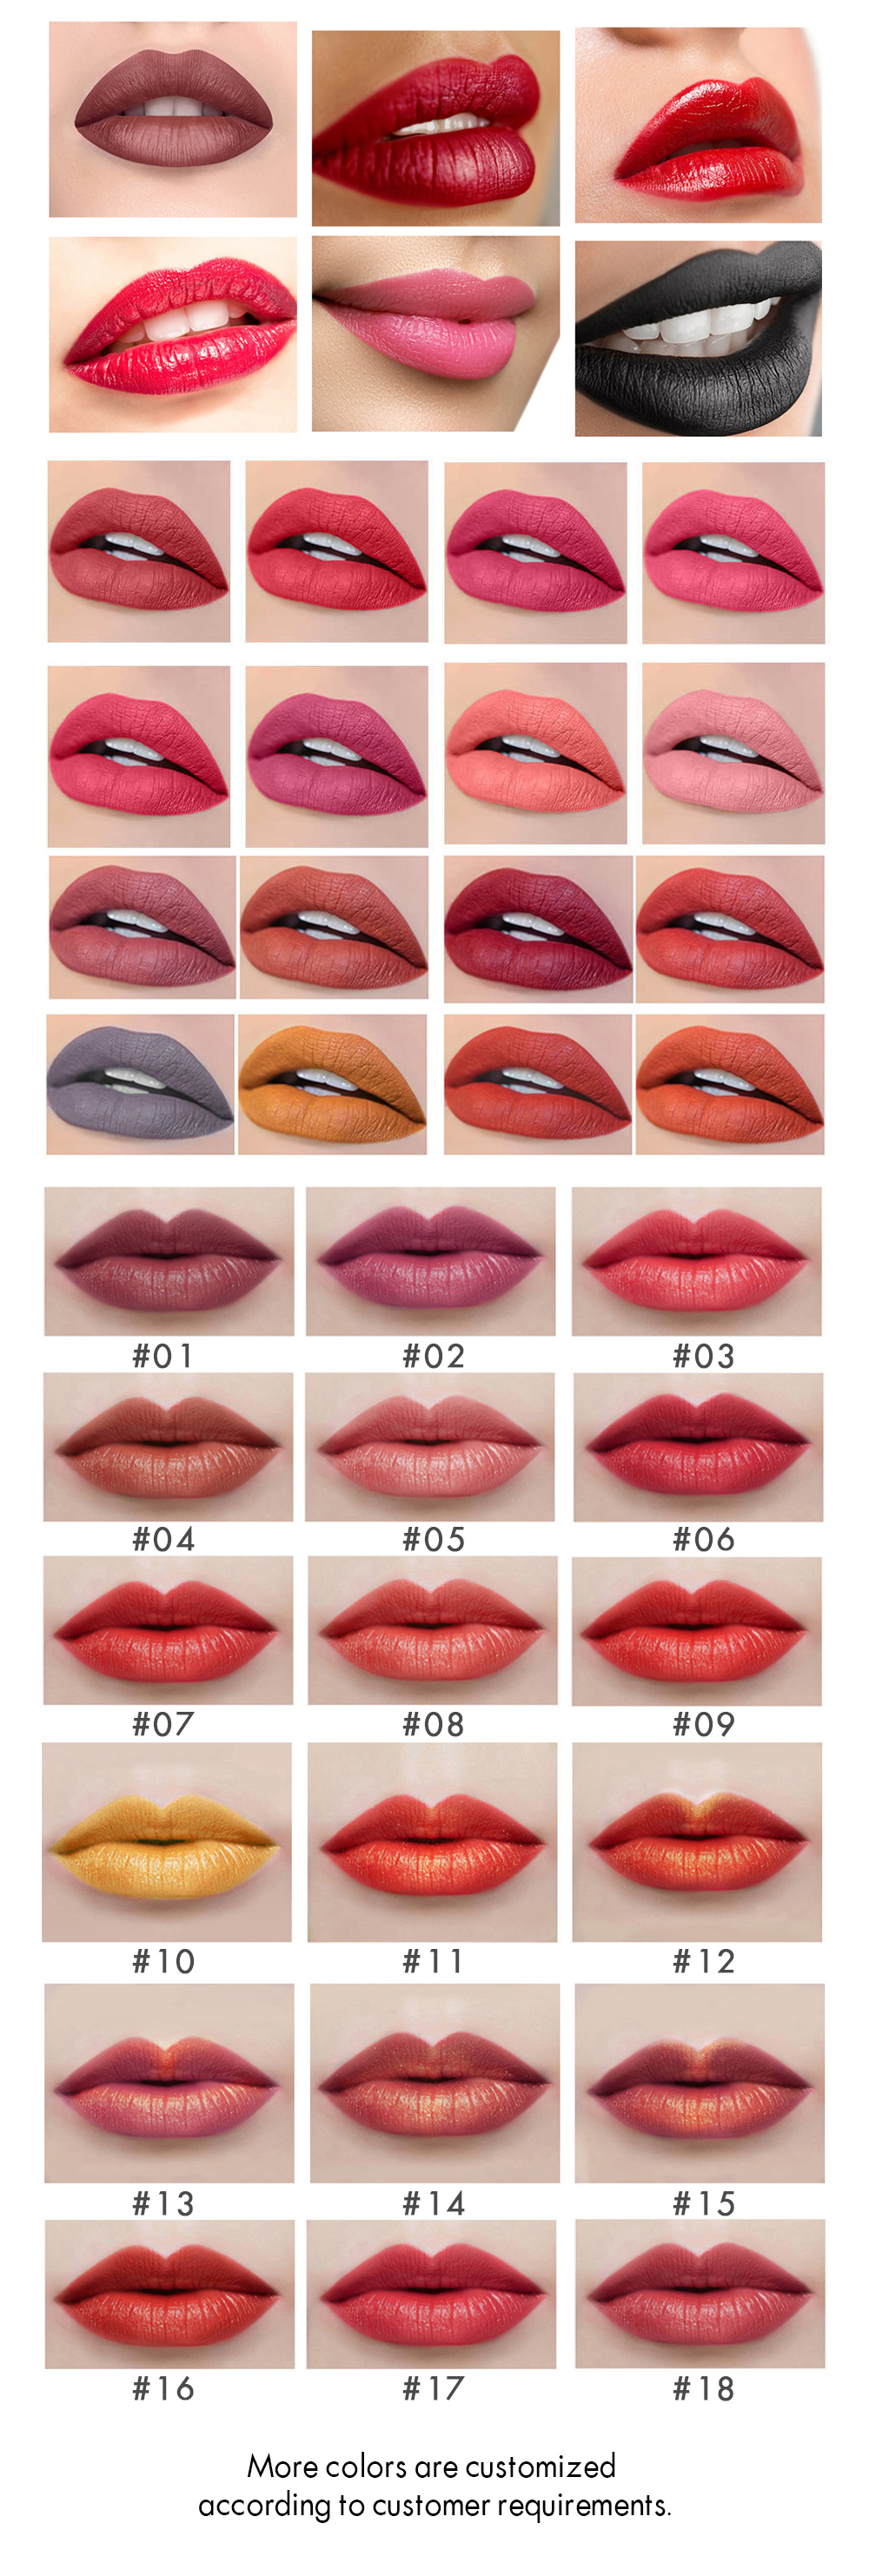 3. Liquid lipstick color card